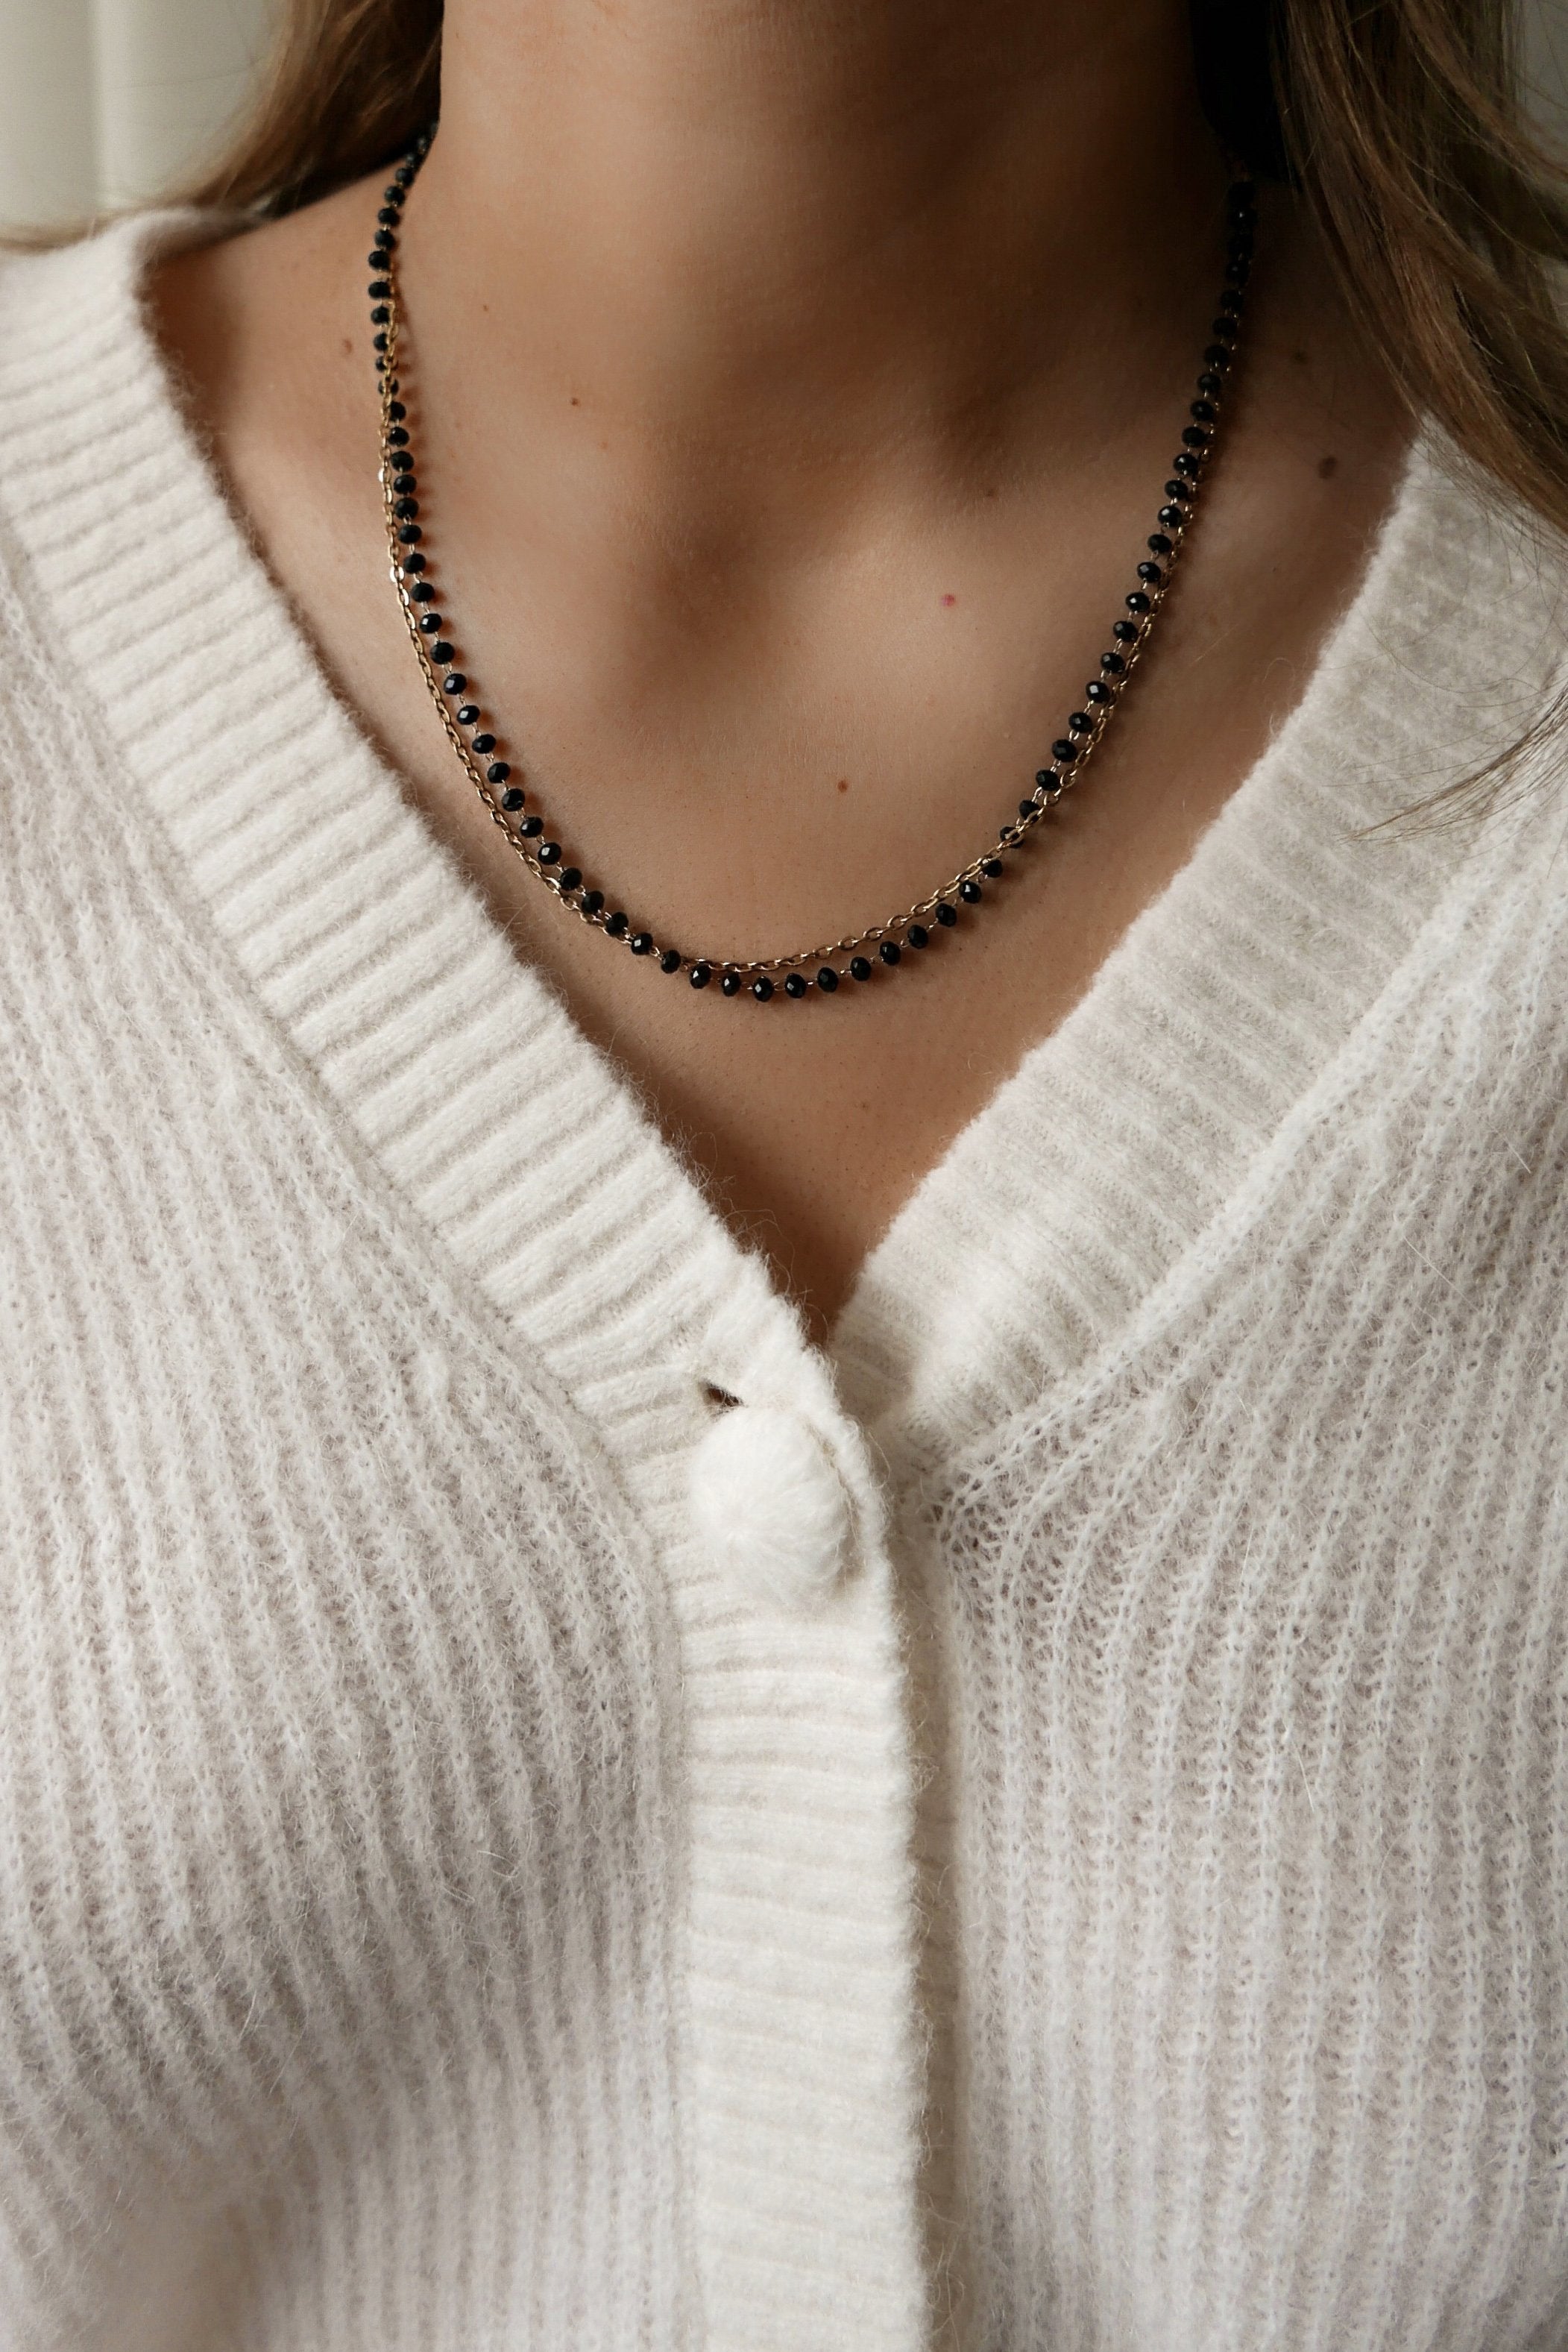 Bridget Necklace - Boutique Minimaliste has waterproof, durable, elegant and vintage inspired jewelry